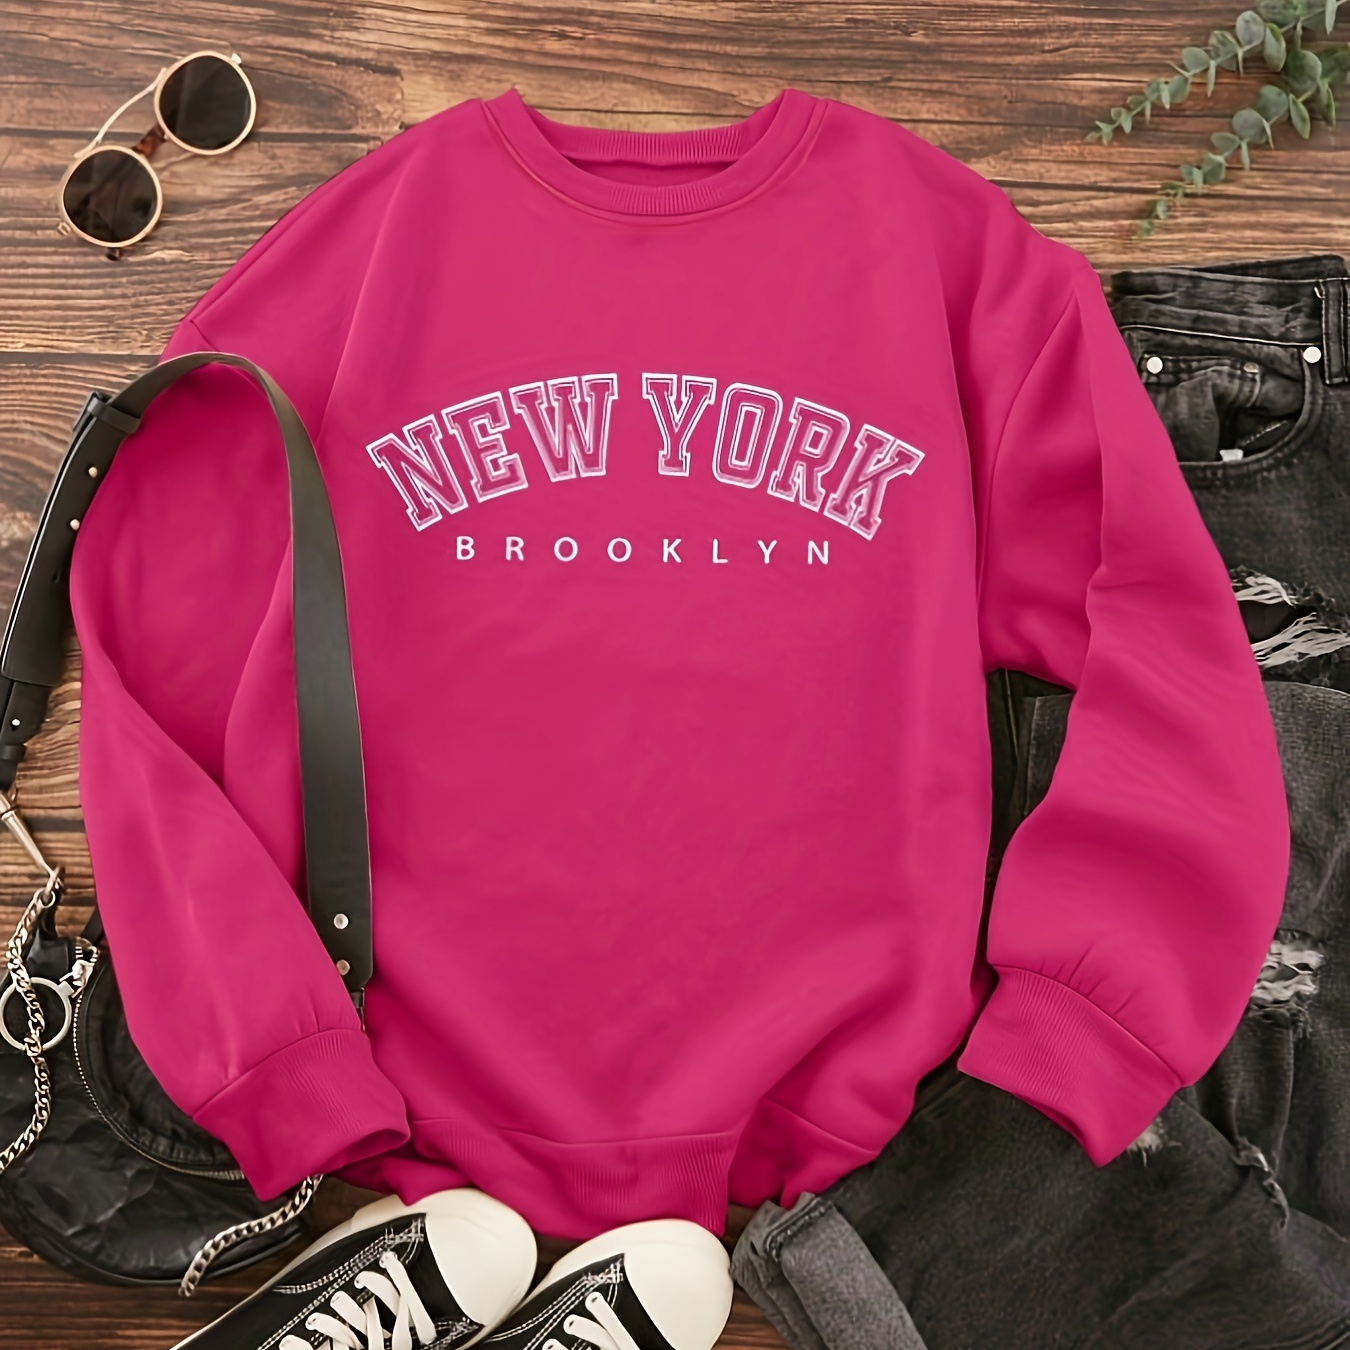 

New York Letter Print Crew Neck Sweatshirt, Long Sleeve Pullover Sports Sweatshirt, Women's Clothing